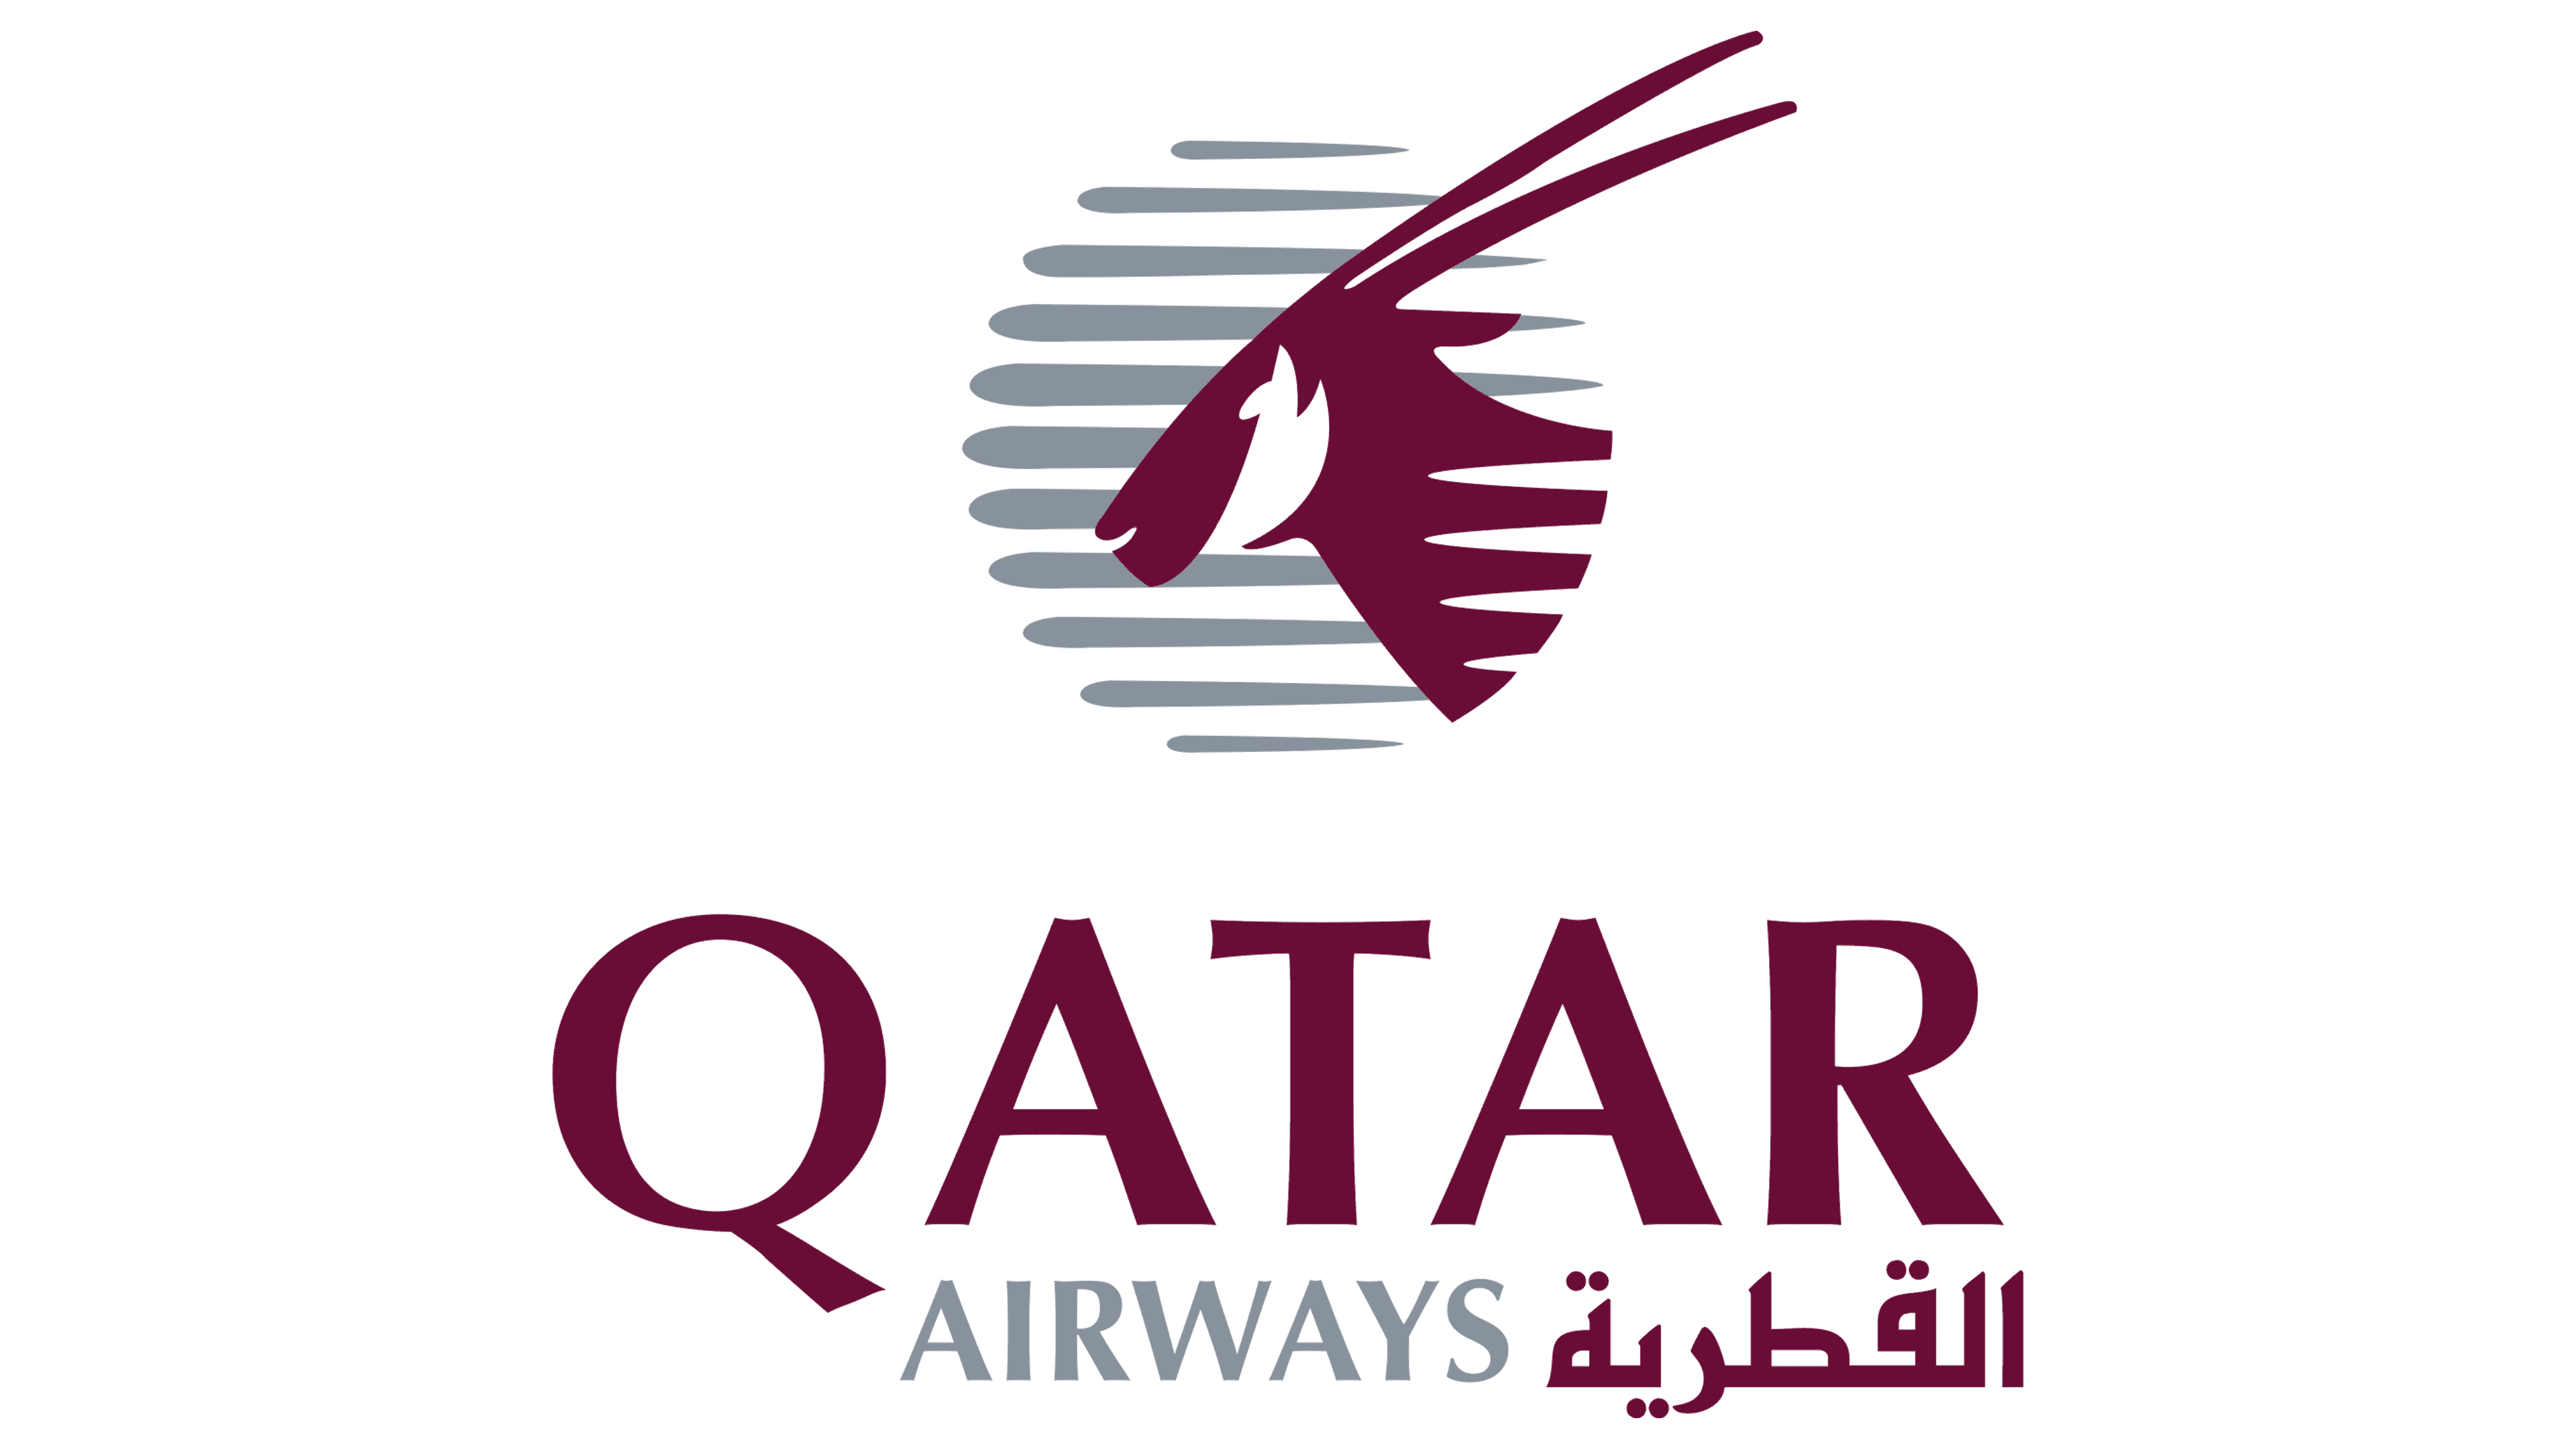 Codici Qatar Airways